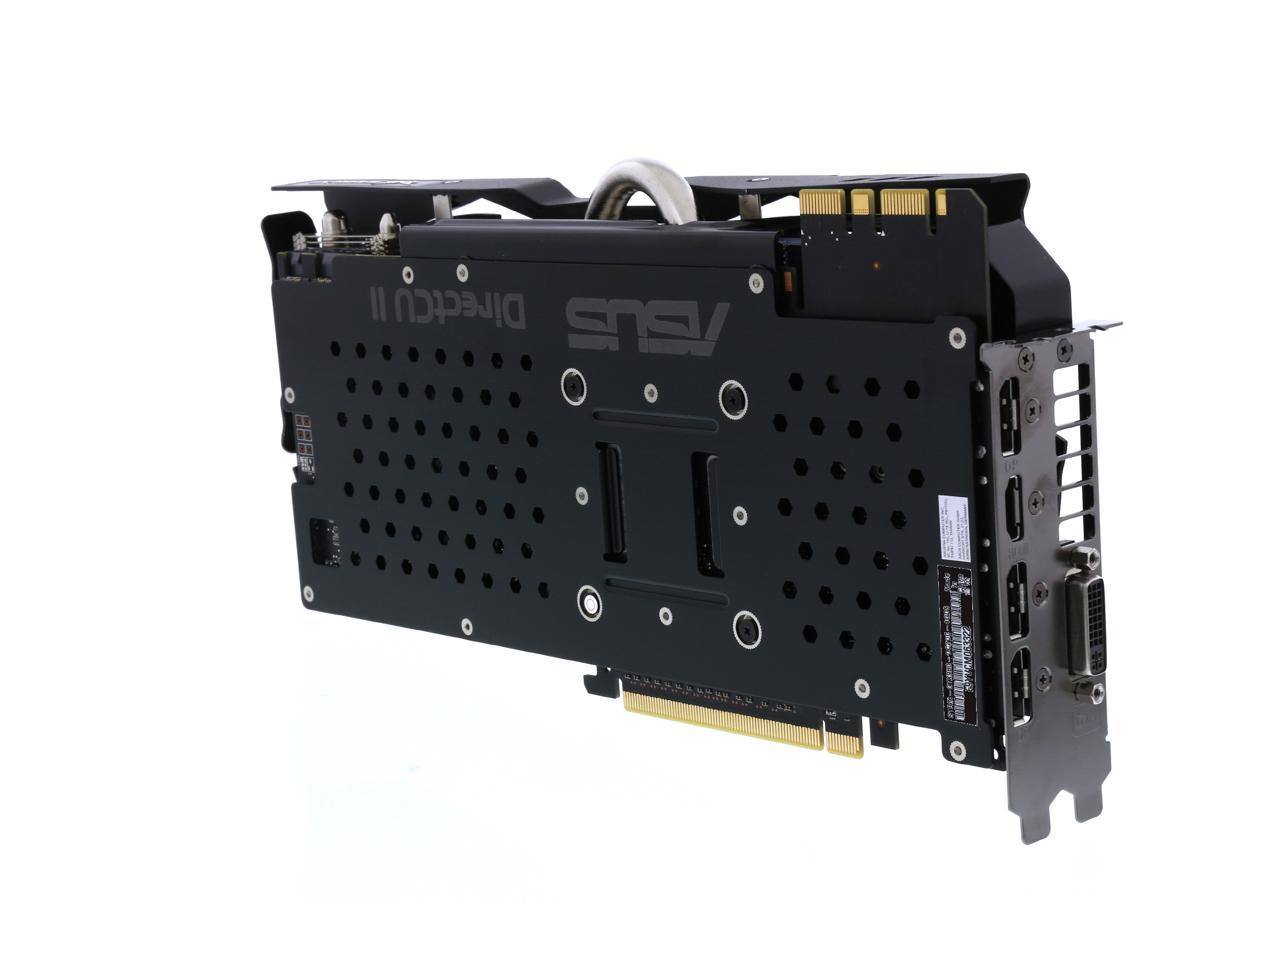 ASUS GeForce GTX 980 Video Card STRIX-GTX980-DC2OC-4GD5 - Newegg.com